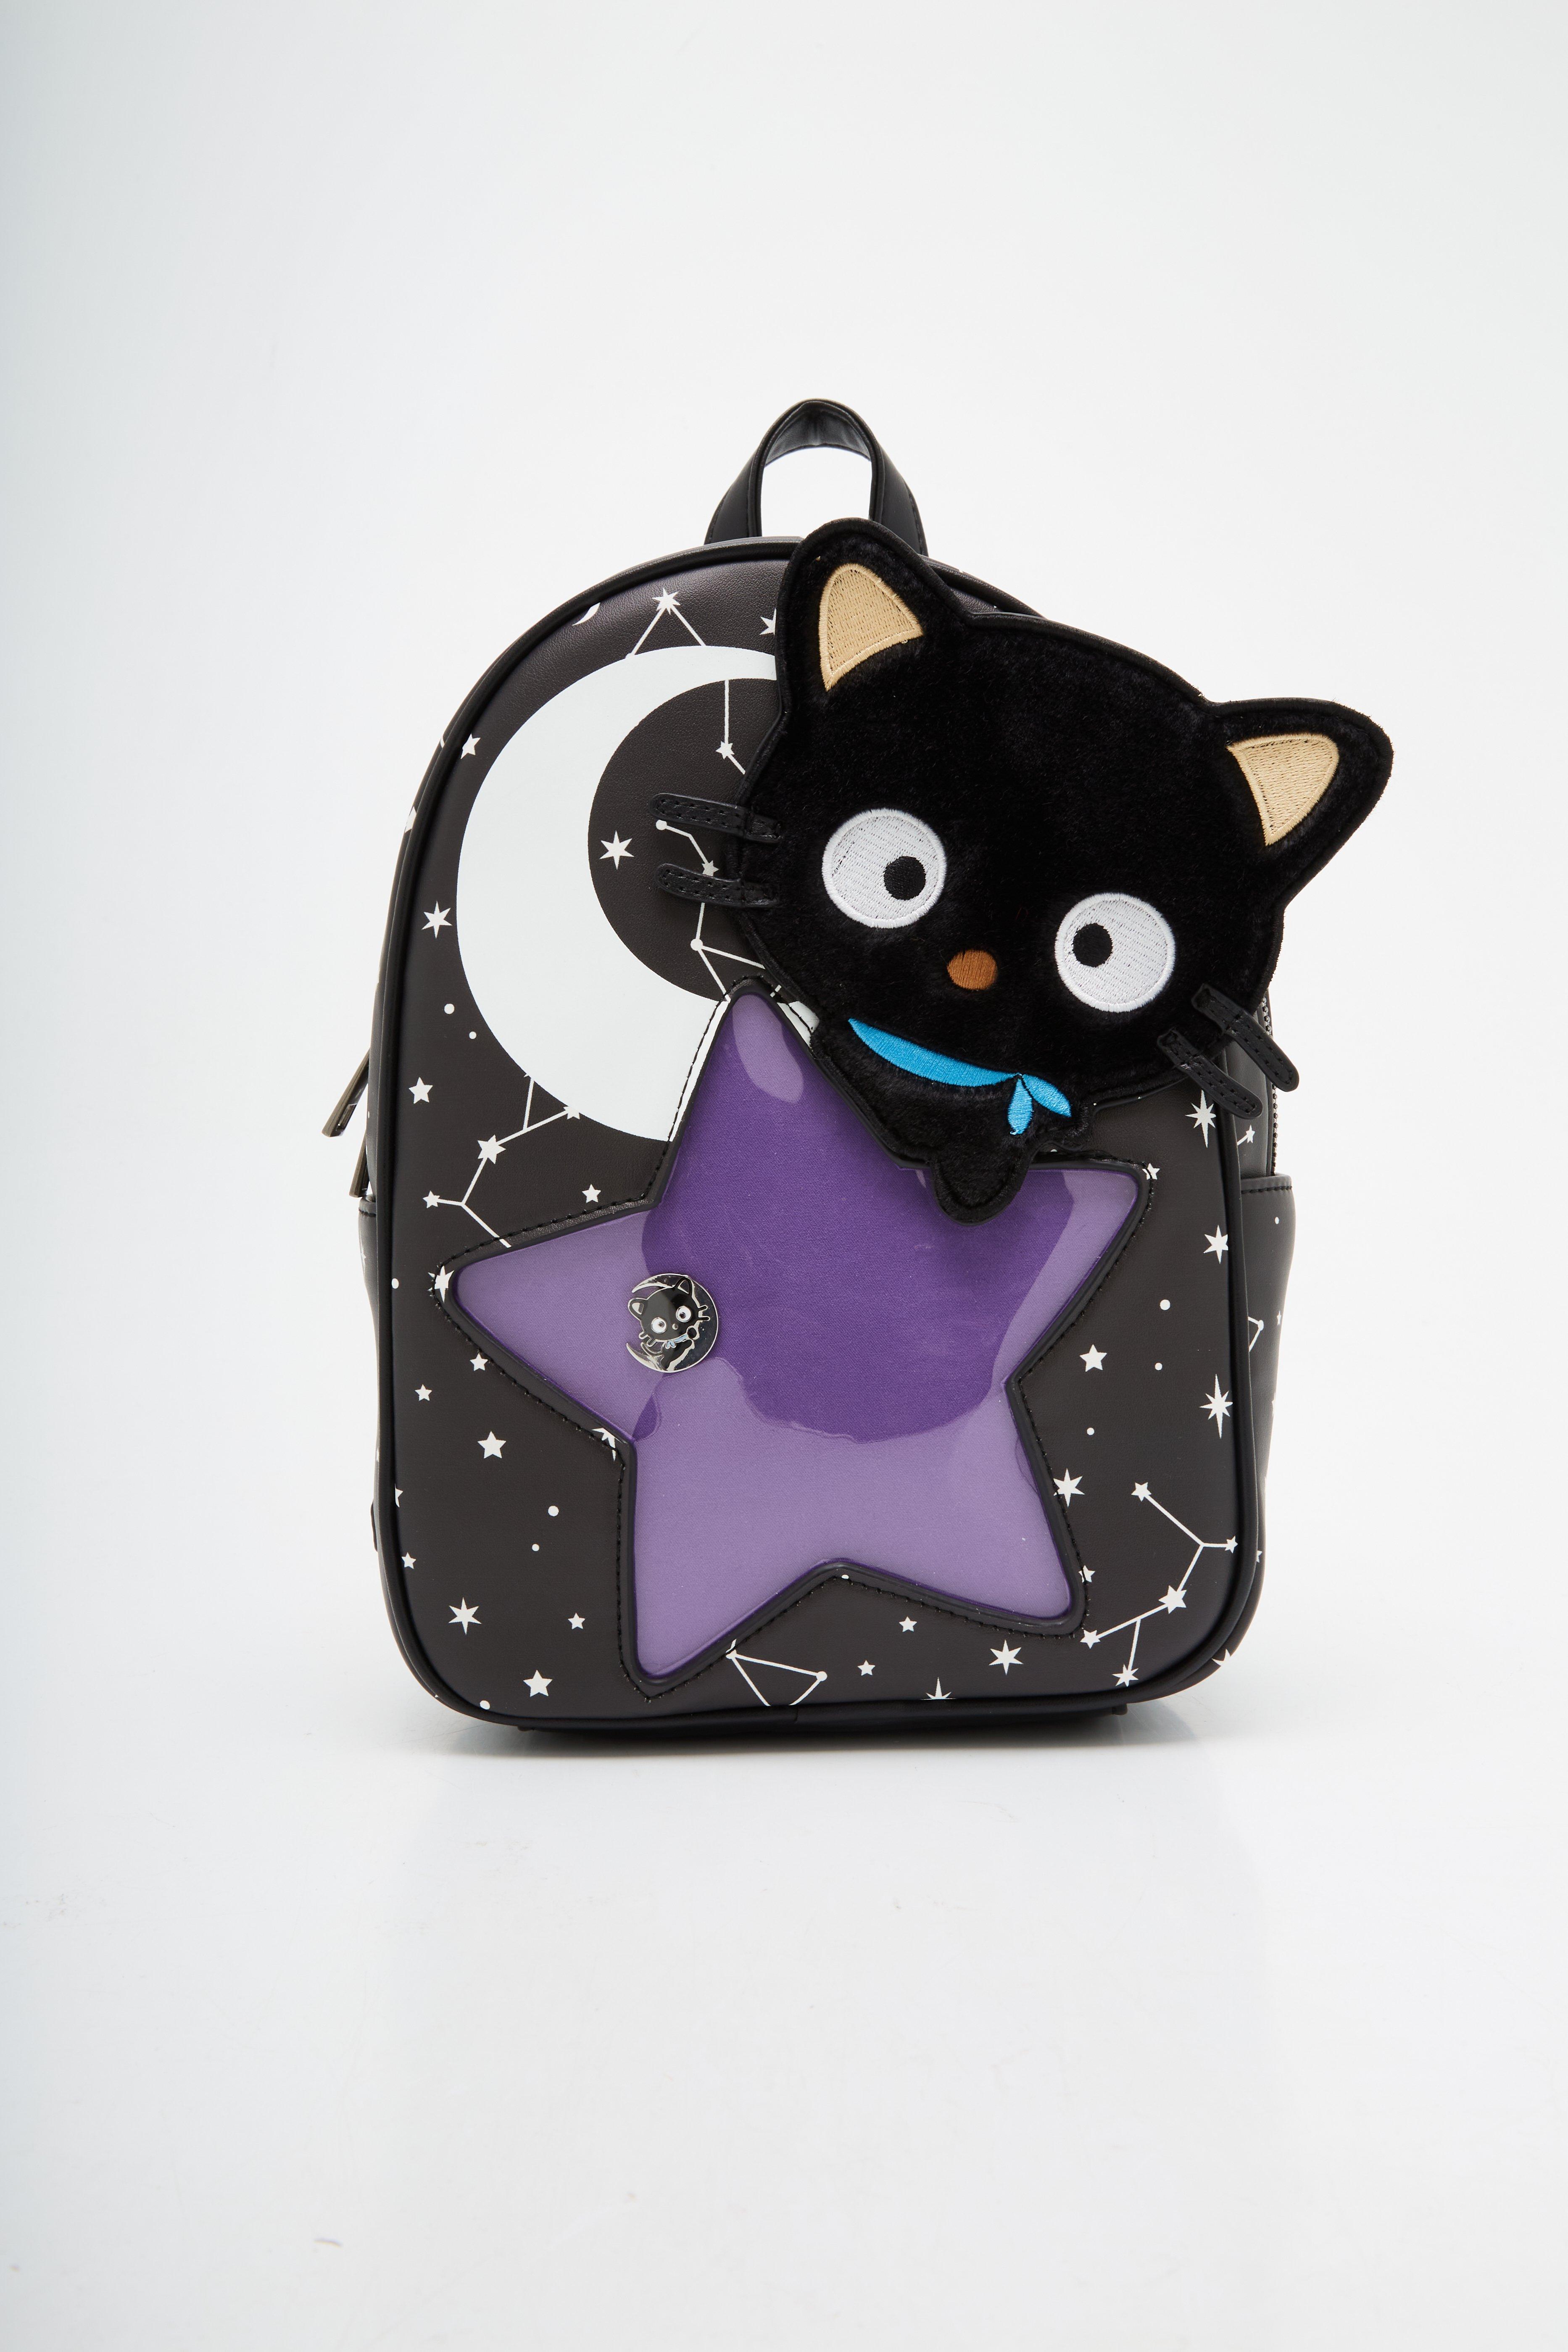 Her Universe Chococat Celestial Glow-In-The-Dark Mini Backpack